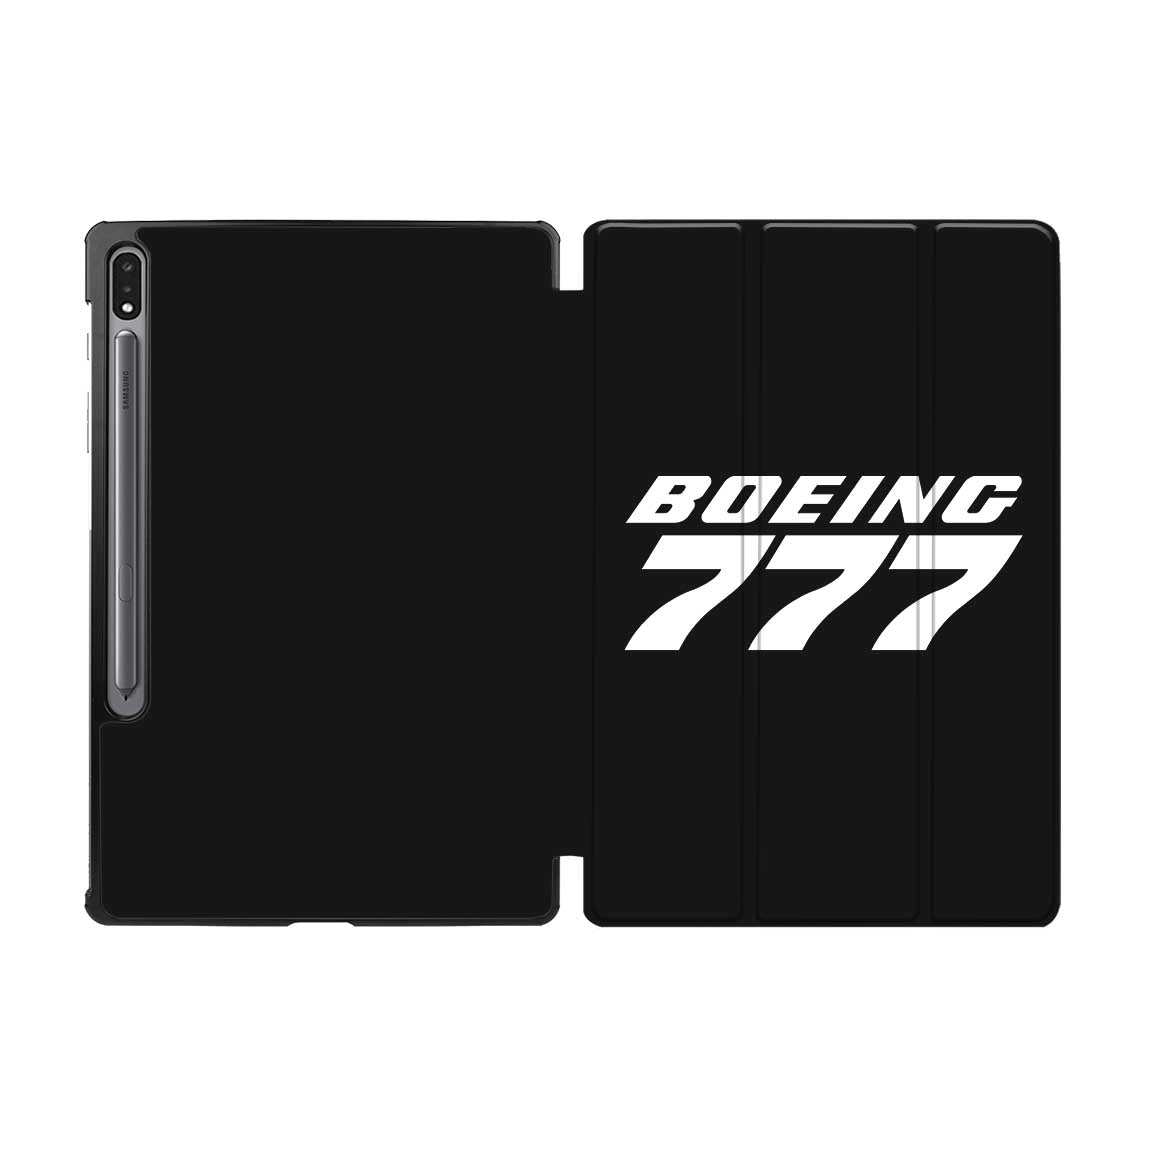 Boeing 777 & Text Designed Samsung Tablet Cases